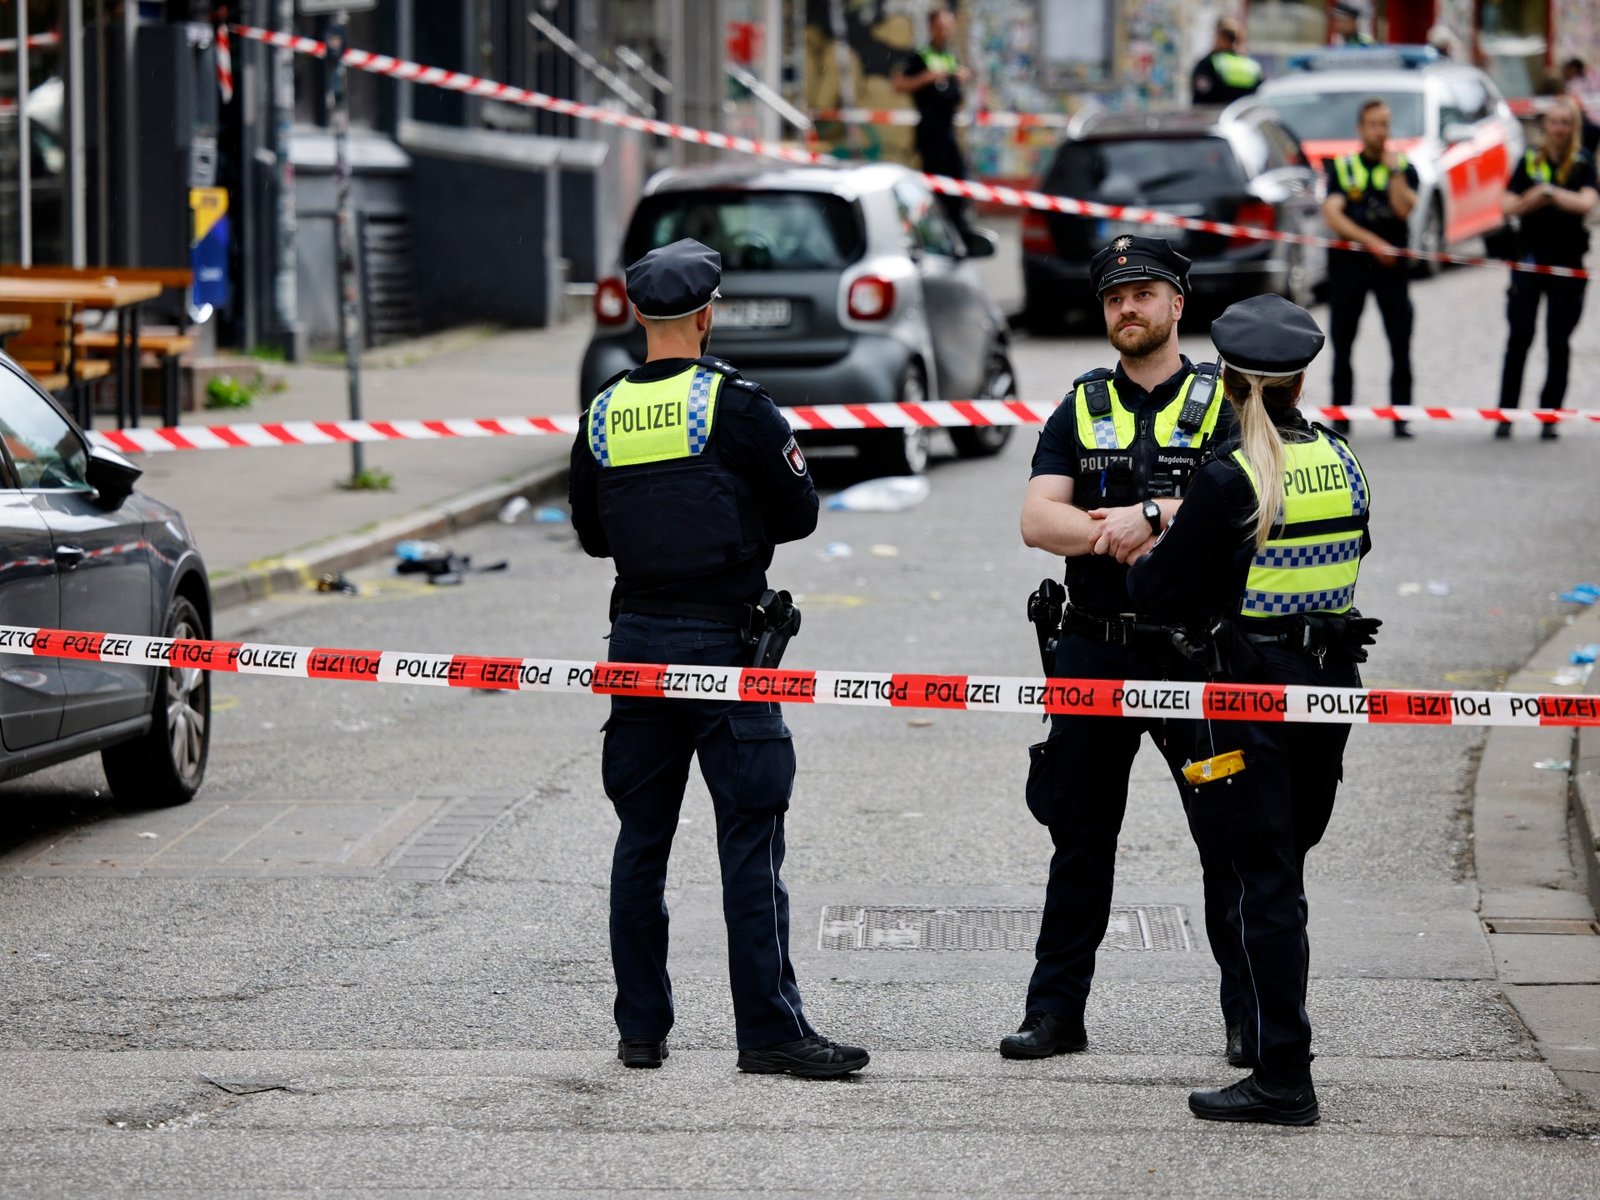 Euro 2024: Hamburg police fire shots at axe-wielding person at fan parade | UEFA Euro 2024 News